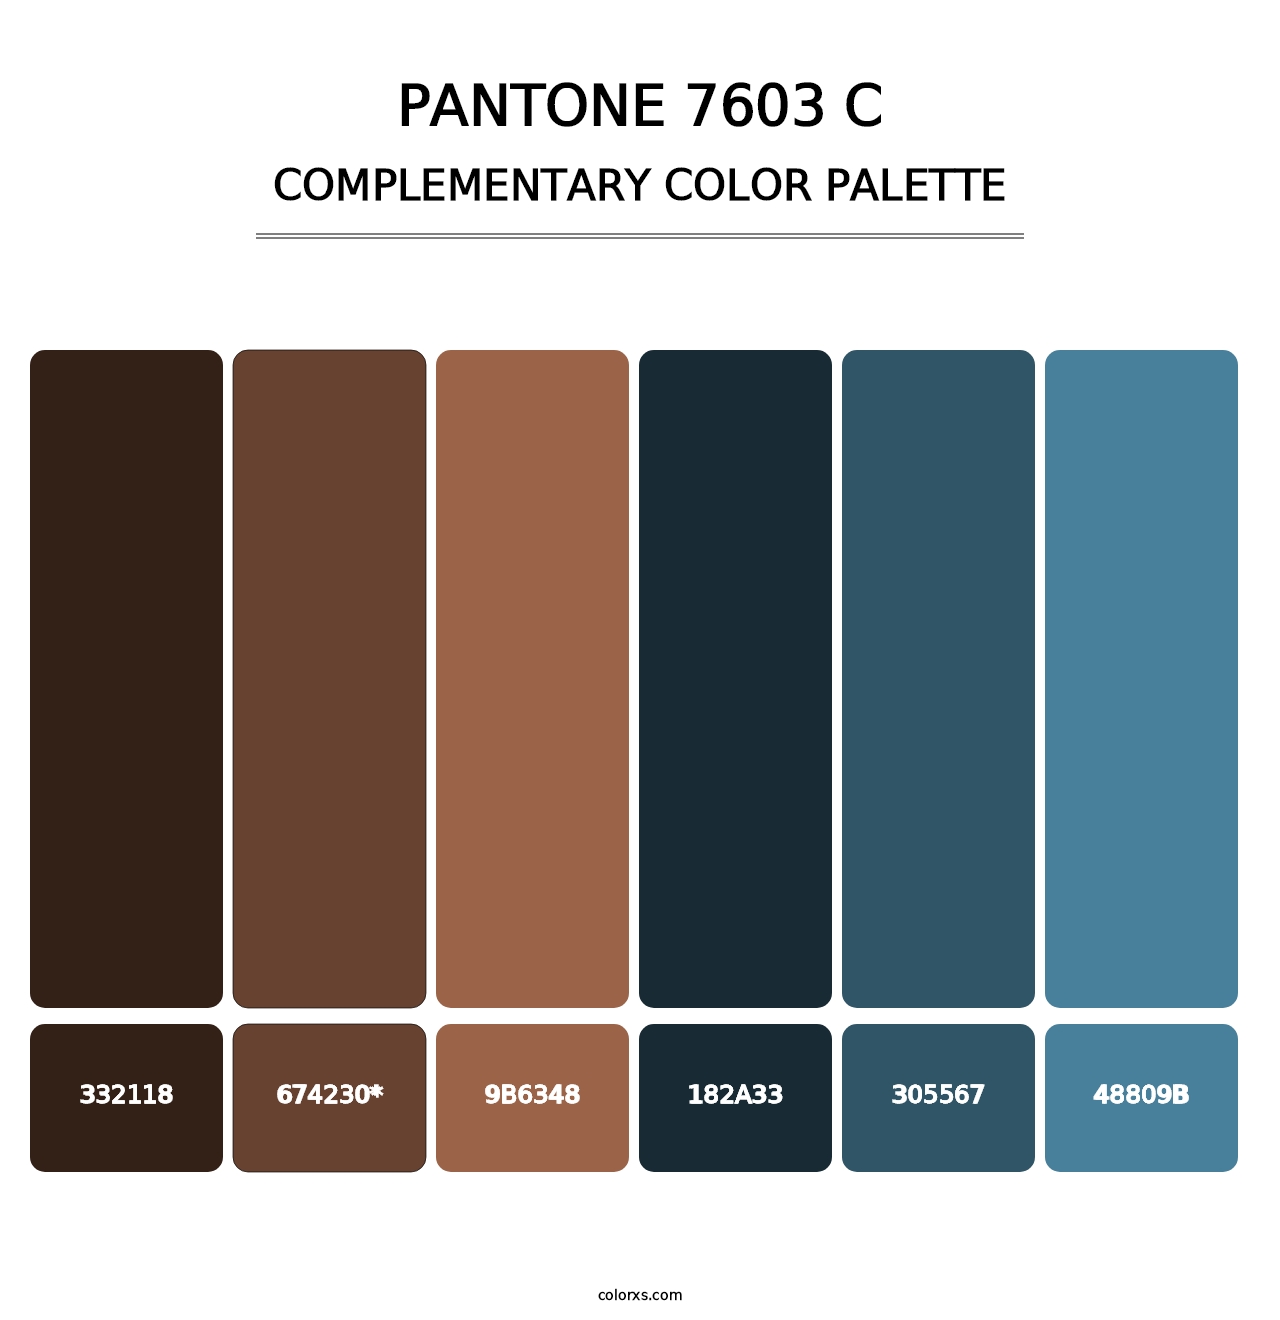 PANTONE 7603 C - Complementary Color Palette